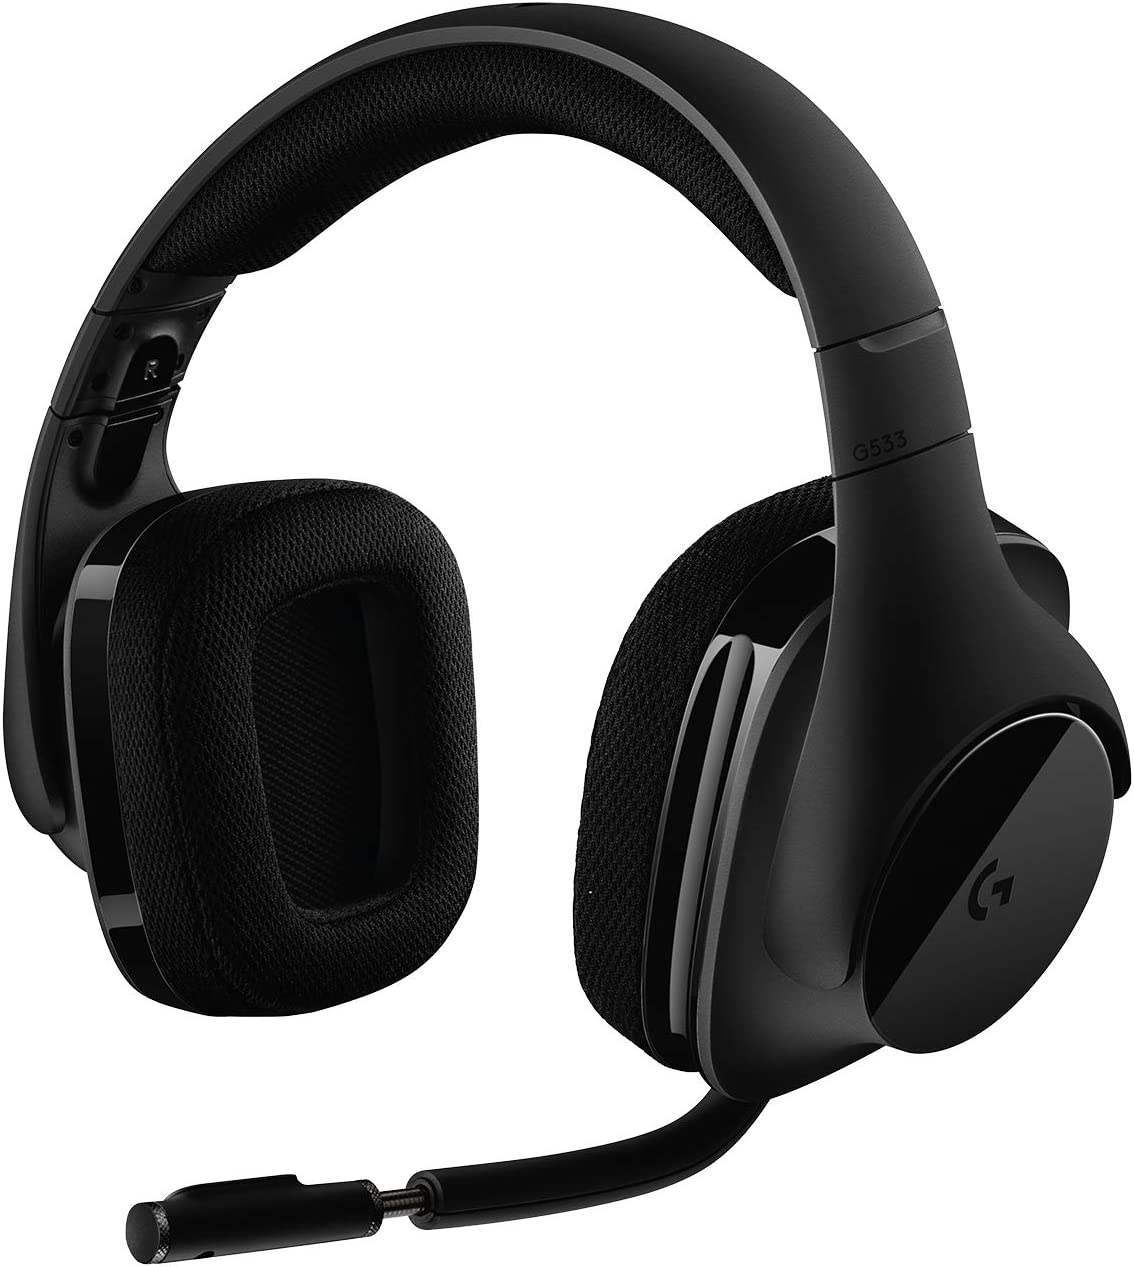 (C) Logitech G533 kabelloses Gaming-Headset, 7.1 Surround Sound